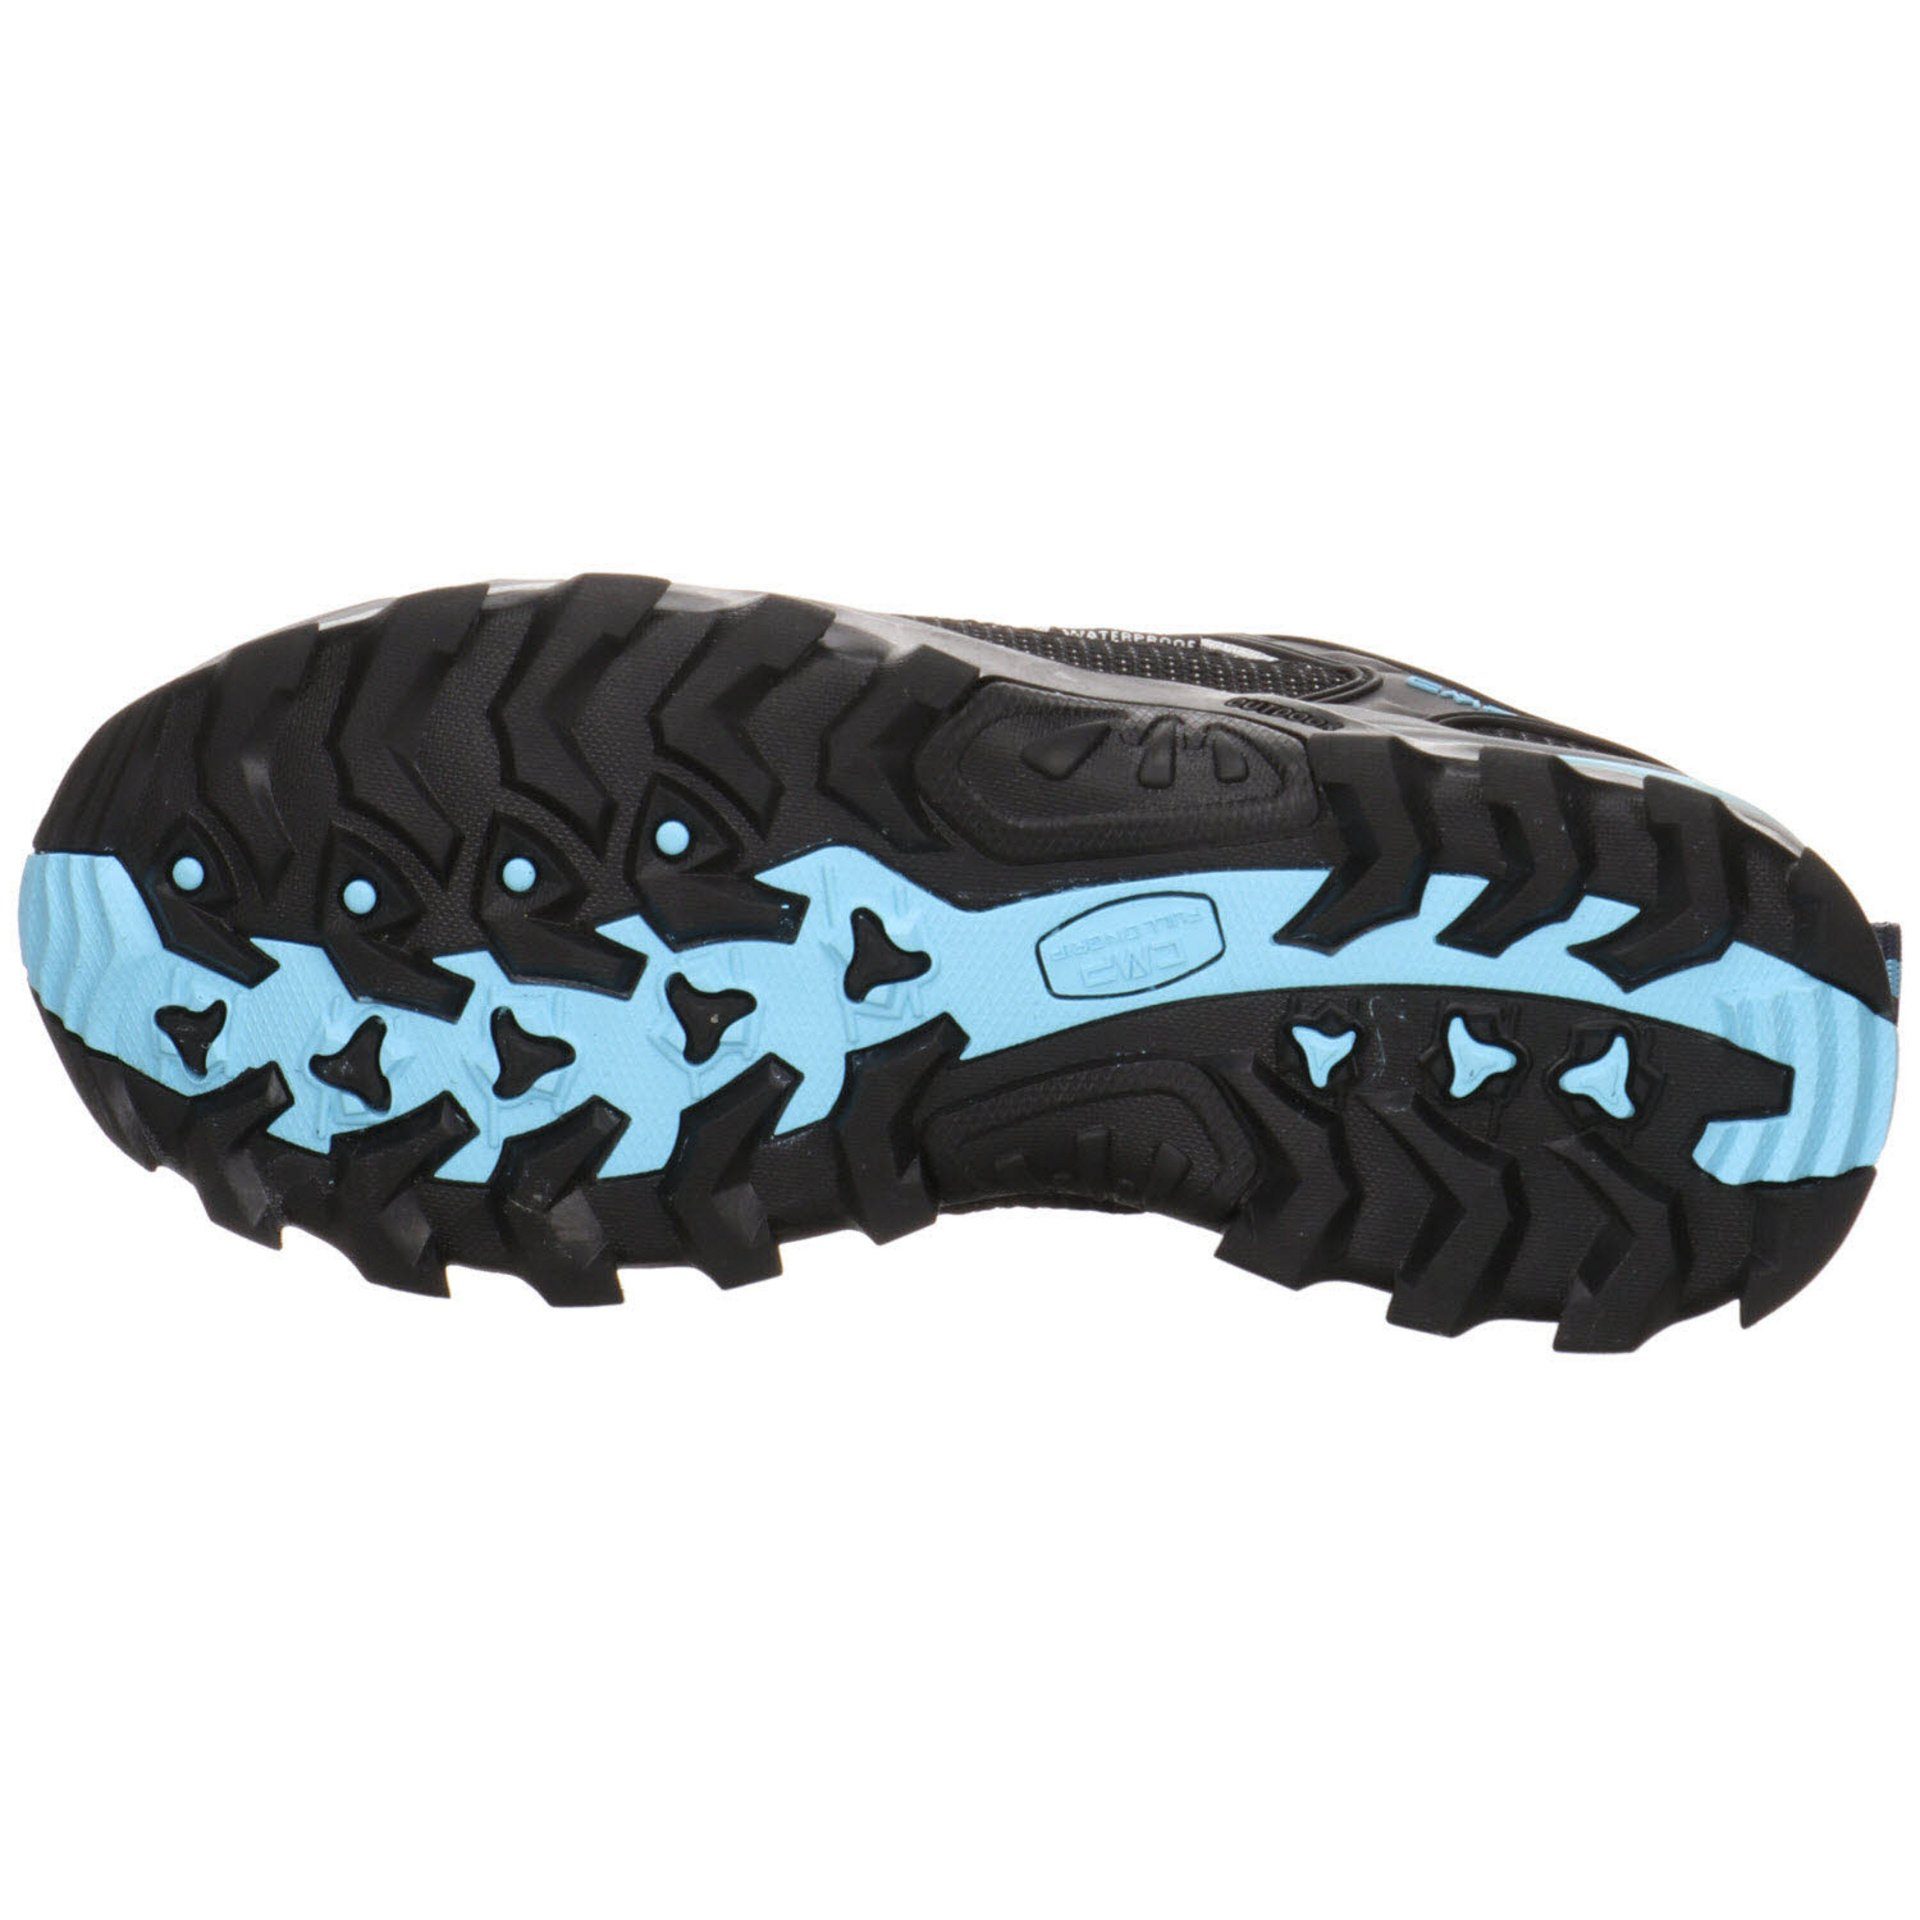 kombi-schwarz Synthetikkombination Outdoorschuh Low Rigel Damen blau Outdoor Outdoorschuh CMP Schuhe